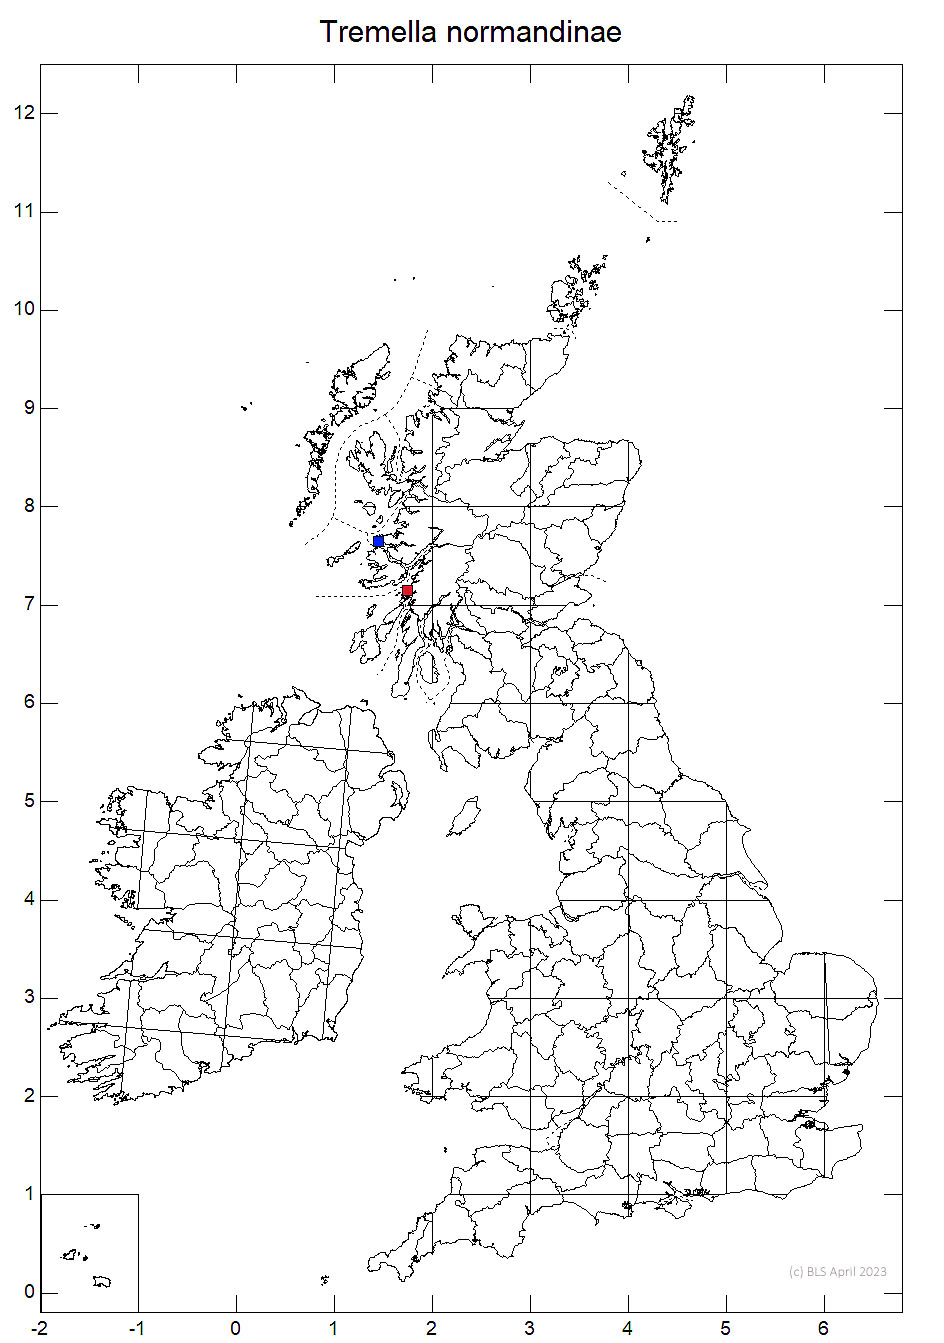 Tremella normandinae 10km sq distribution map